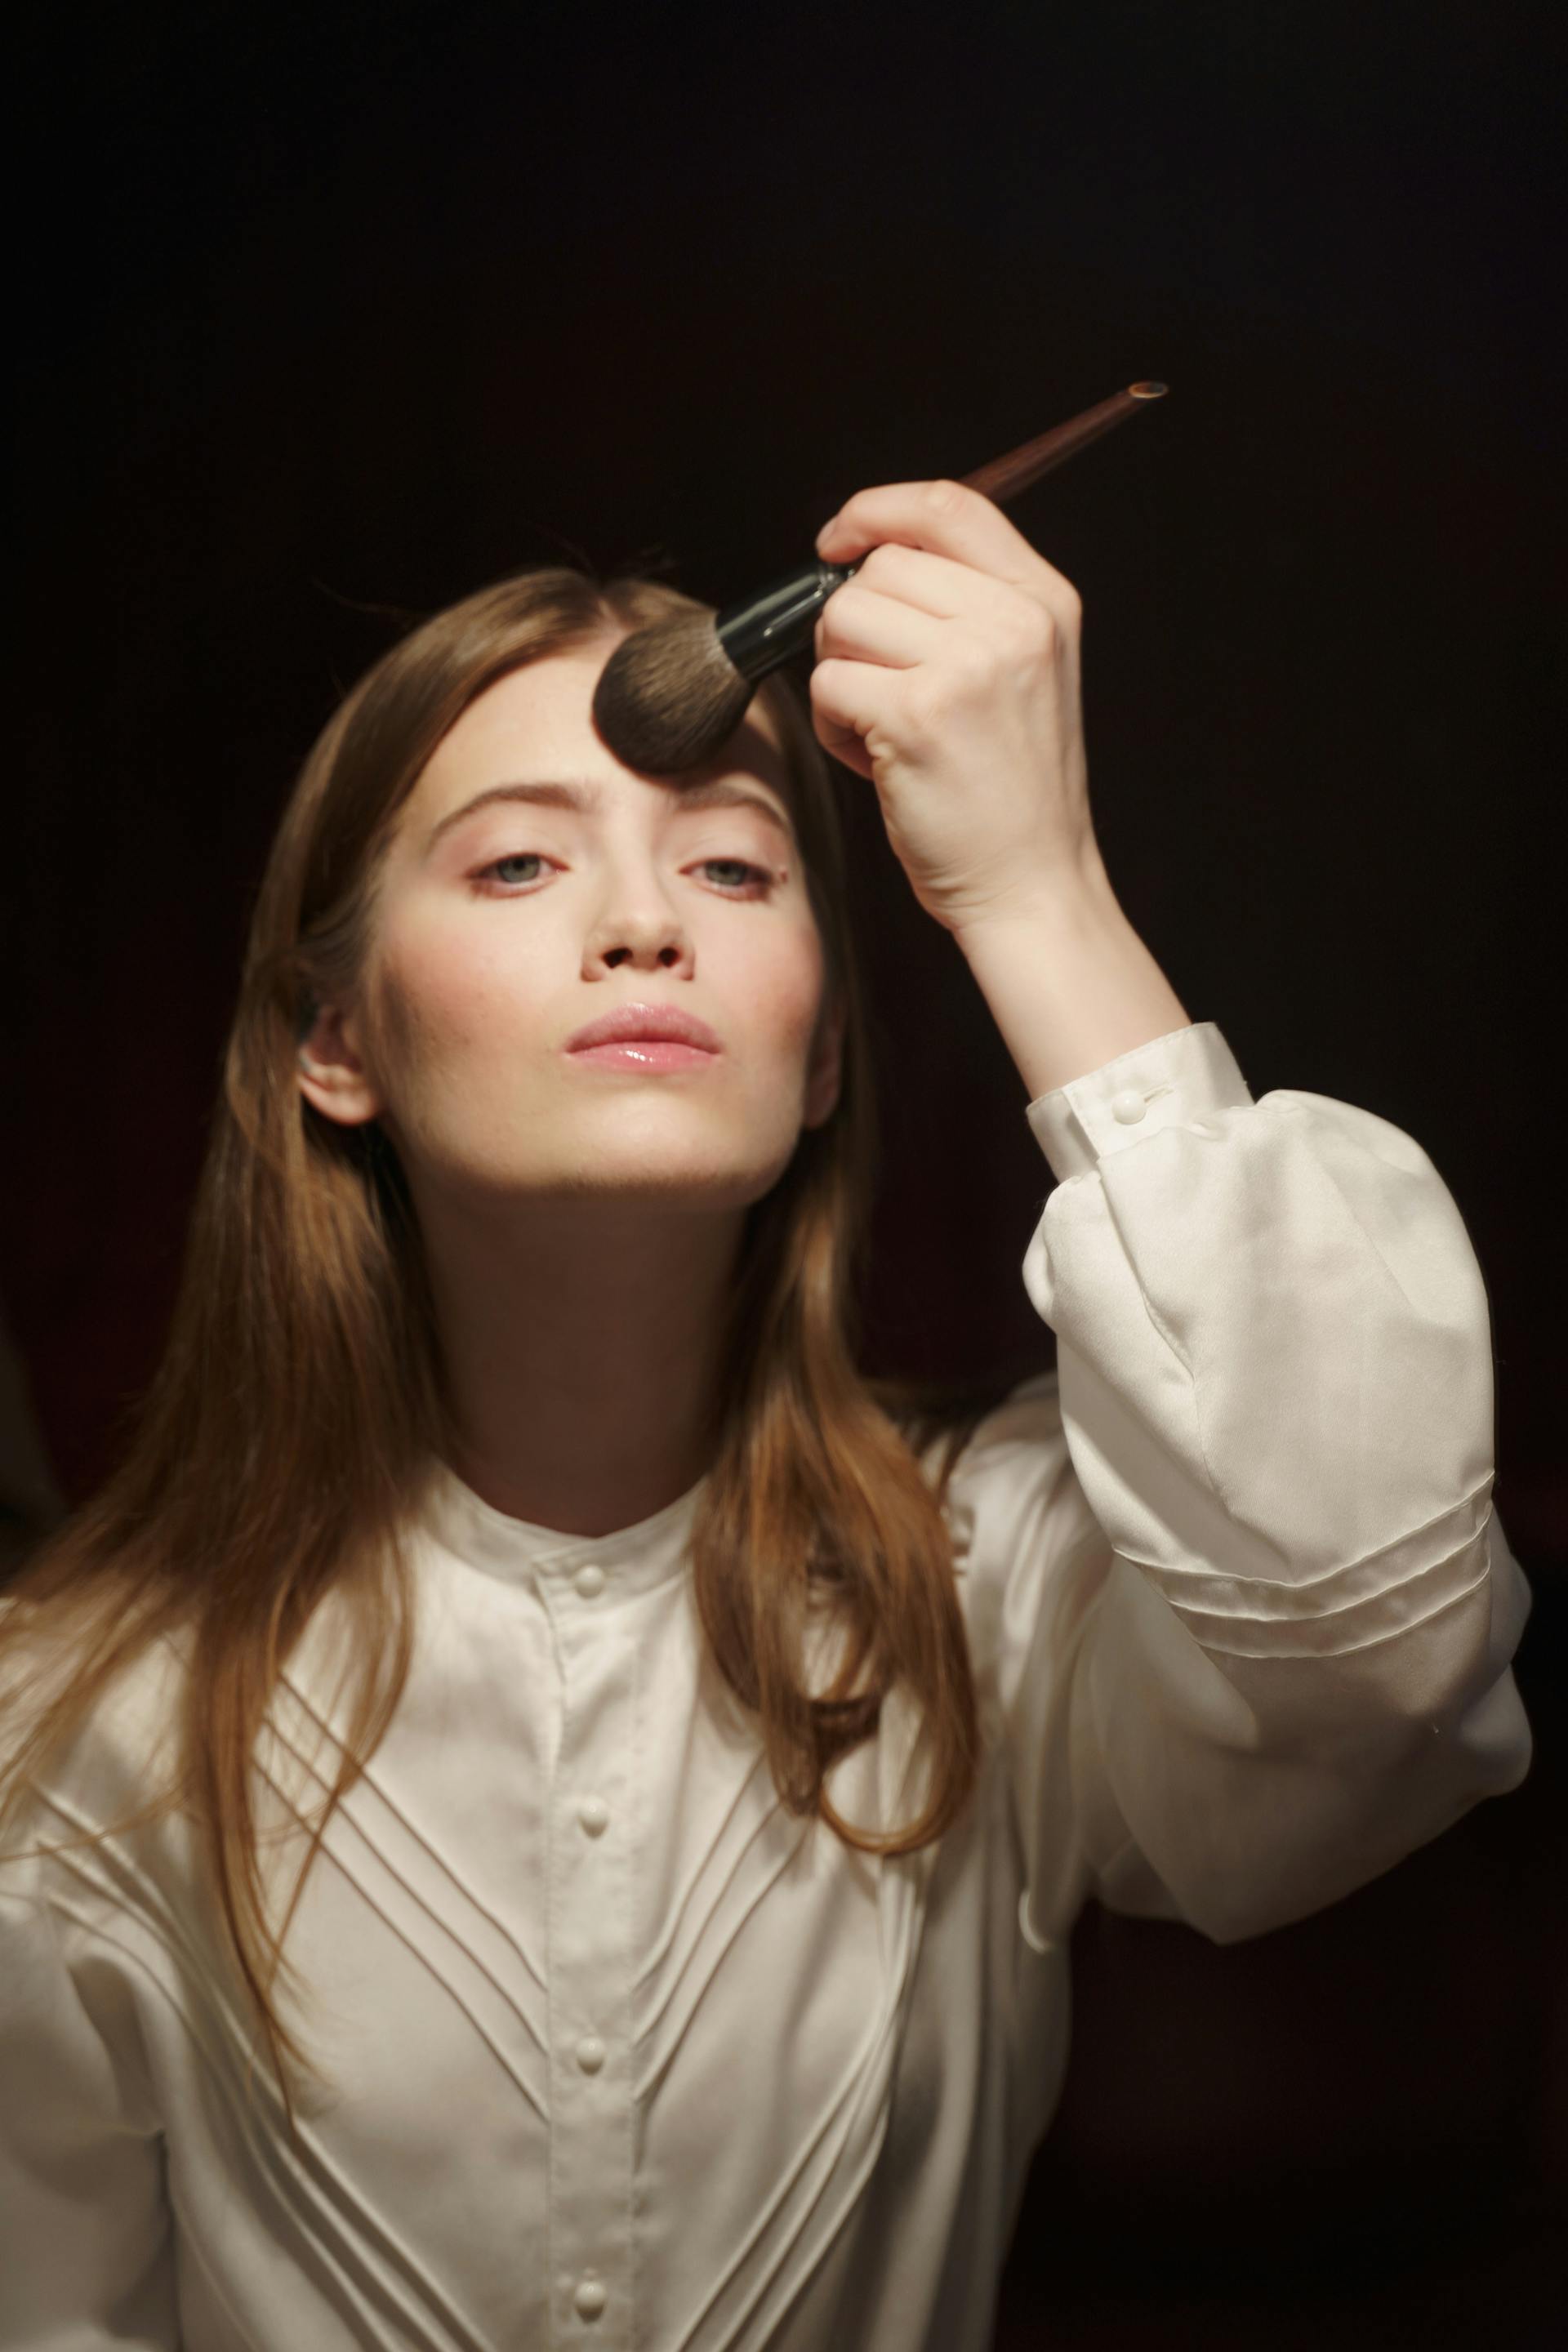 A woman doing her makeup | Source: Pexels